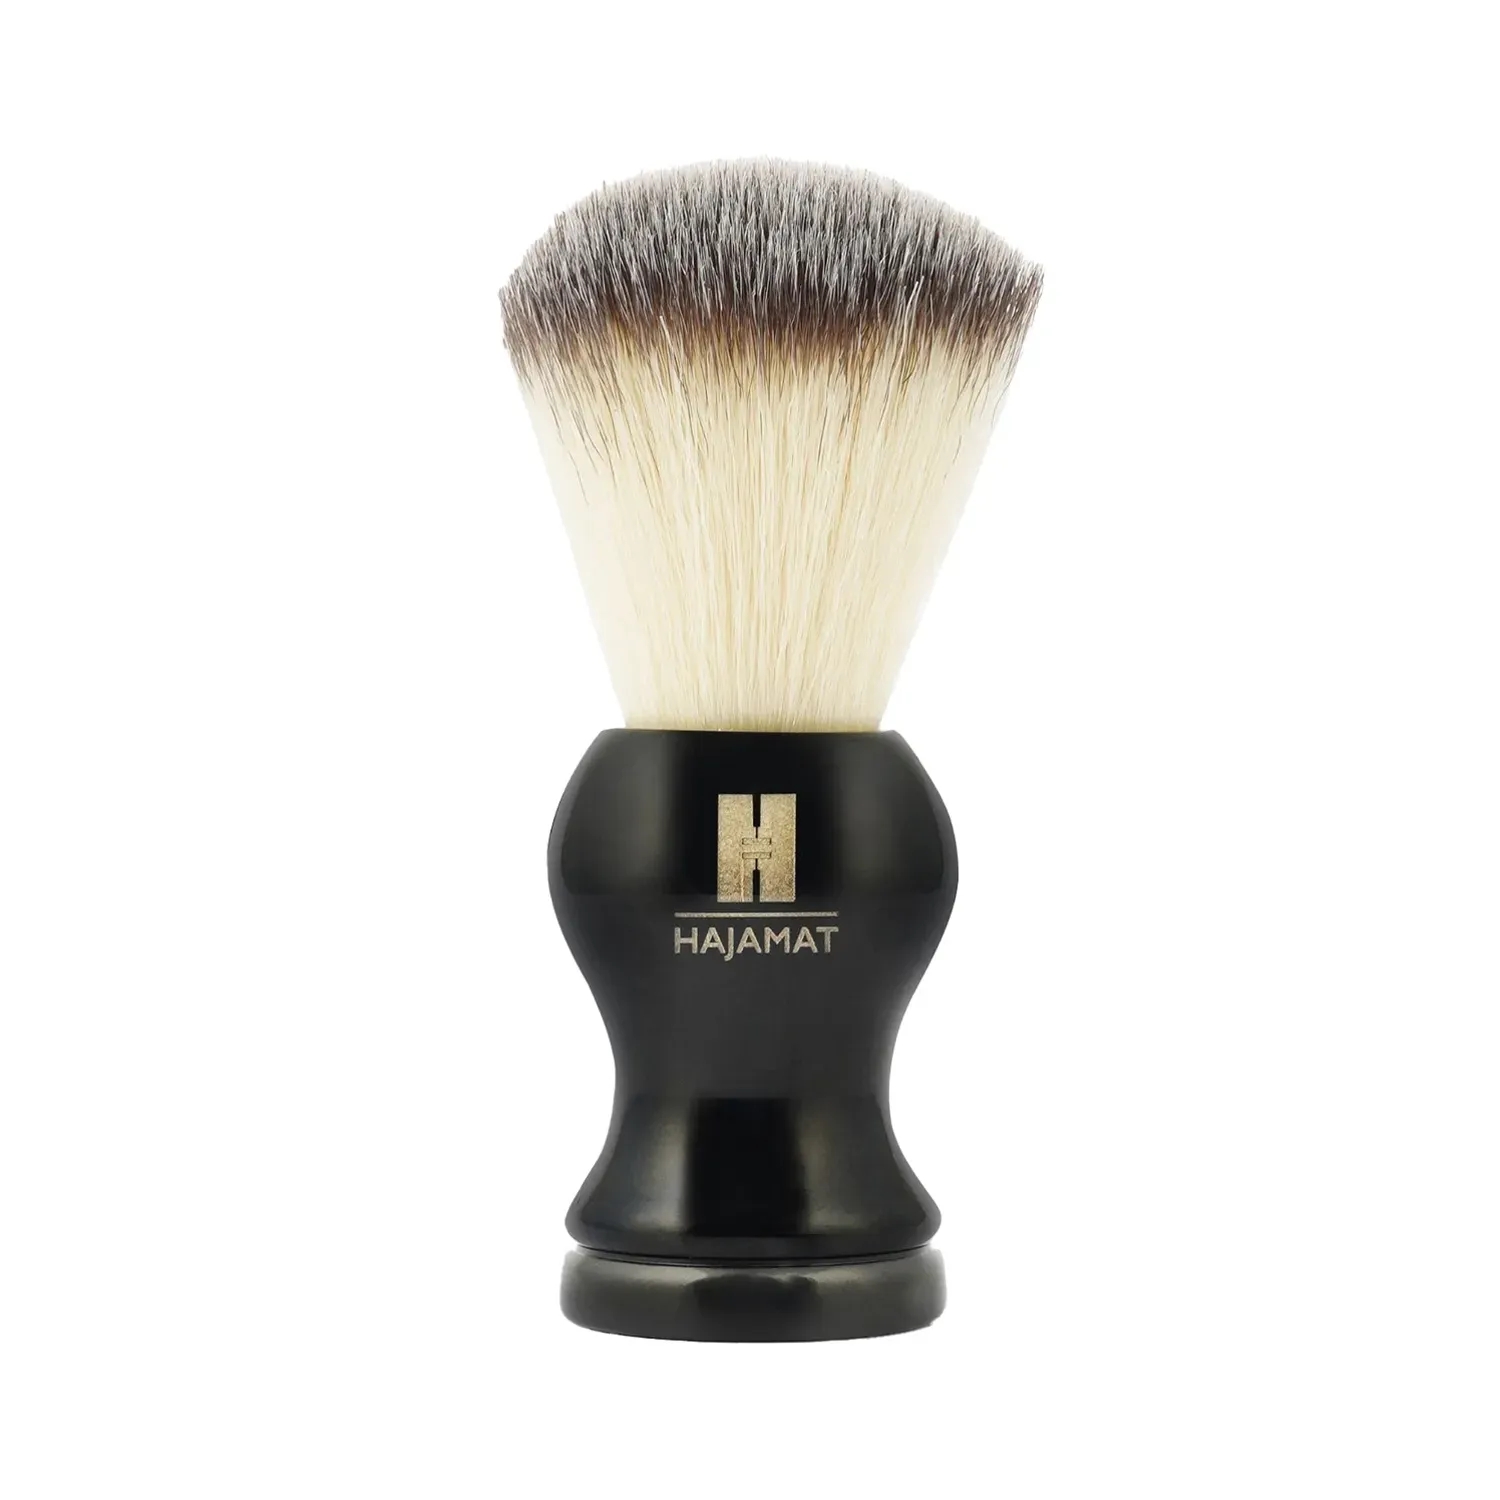 Hajamat | Hajamat Luxurious Shaving Brush with Imitation Badger Bristles, Durable Resin Handle